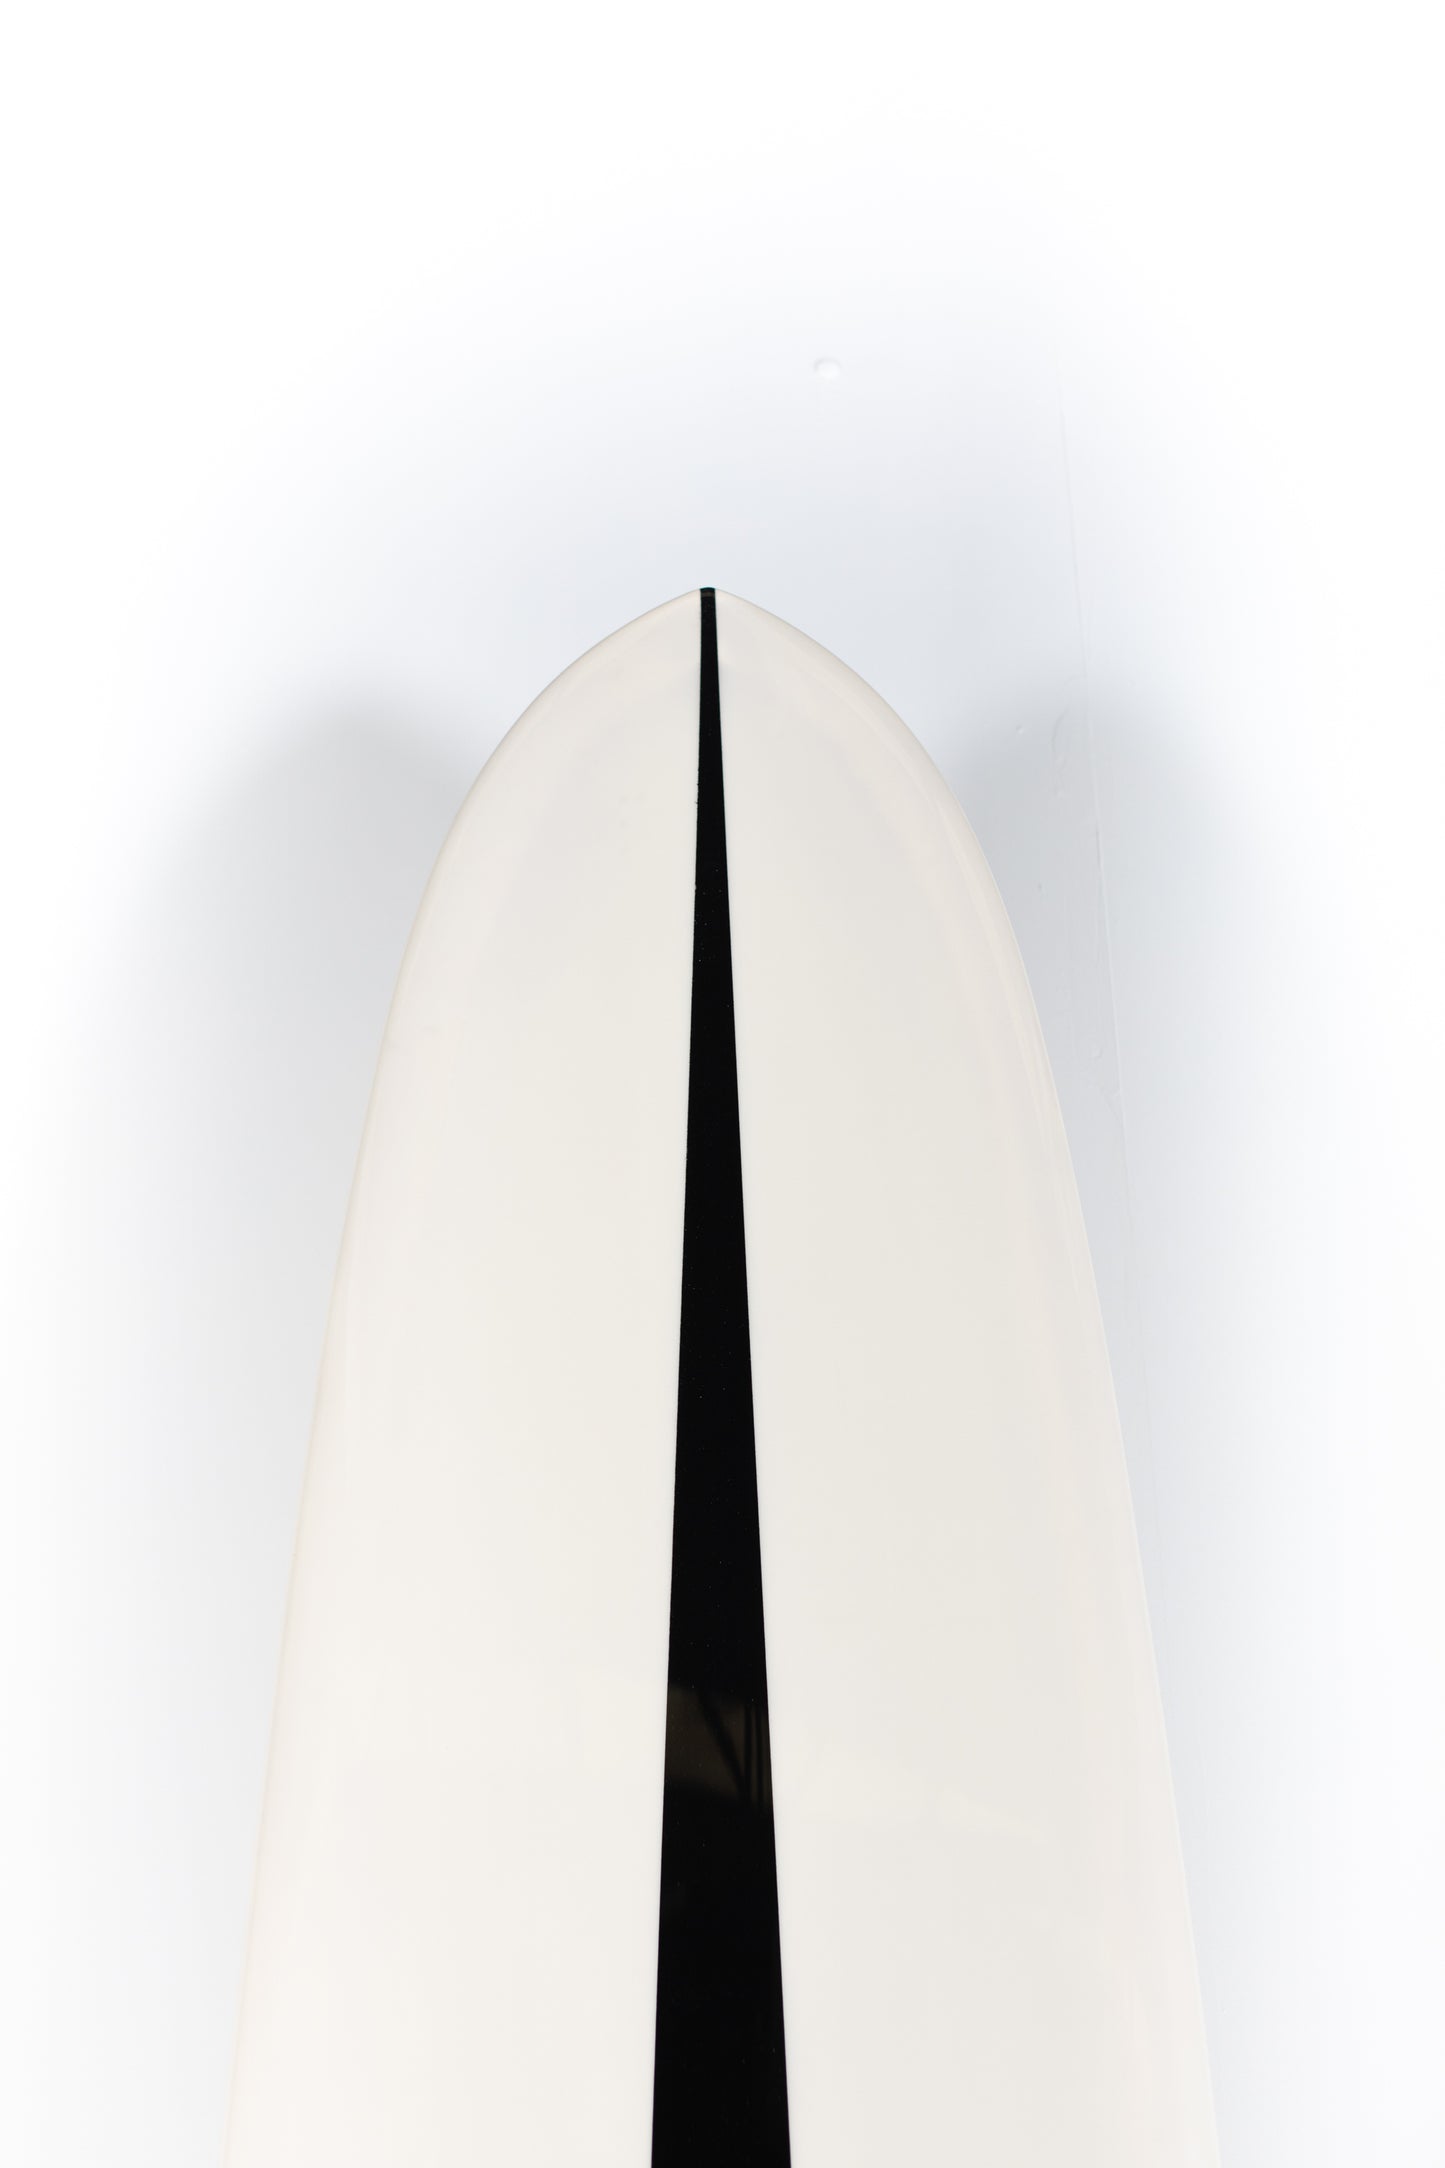 
                  
                    Pukas Surf Shop - Christenson Surfboard  - BANDITO by Chris Christenson - 9'0” x 22 1/2 x 2 13/16 - CX03179
                  
                